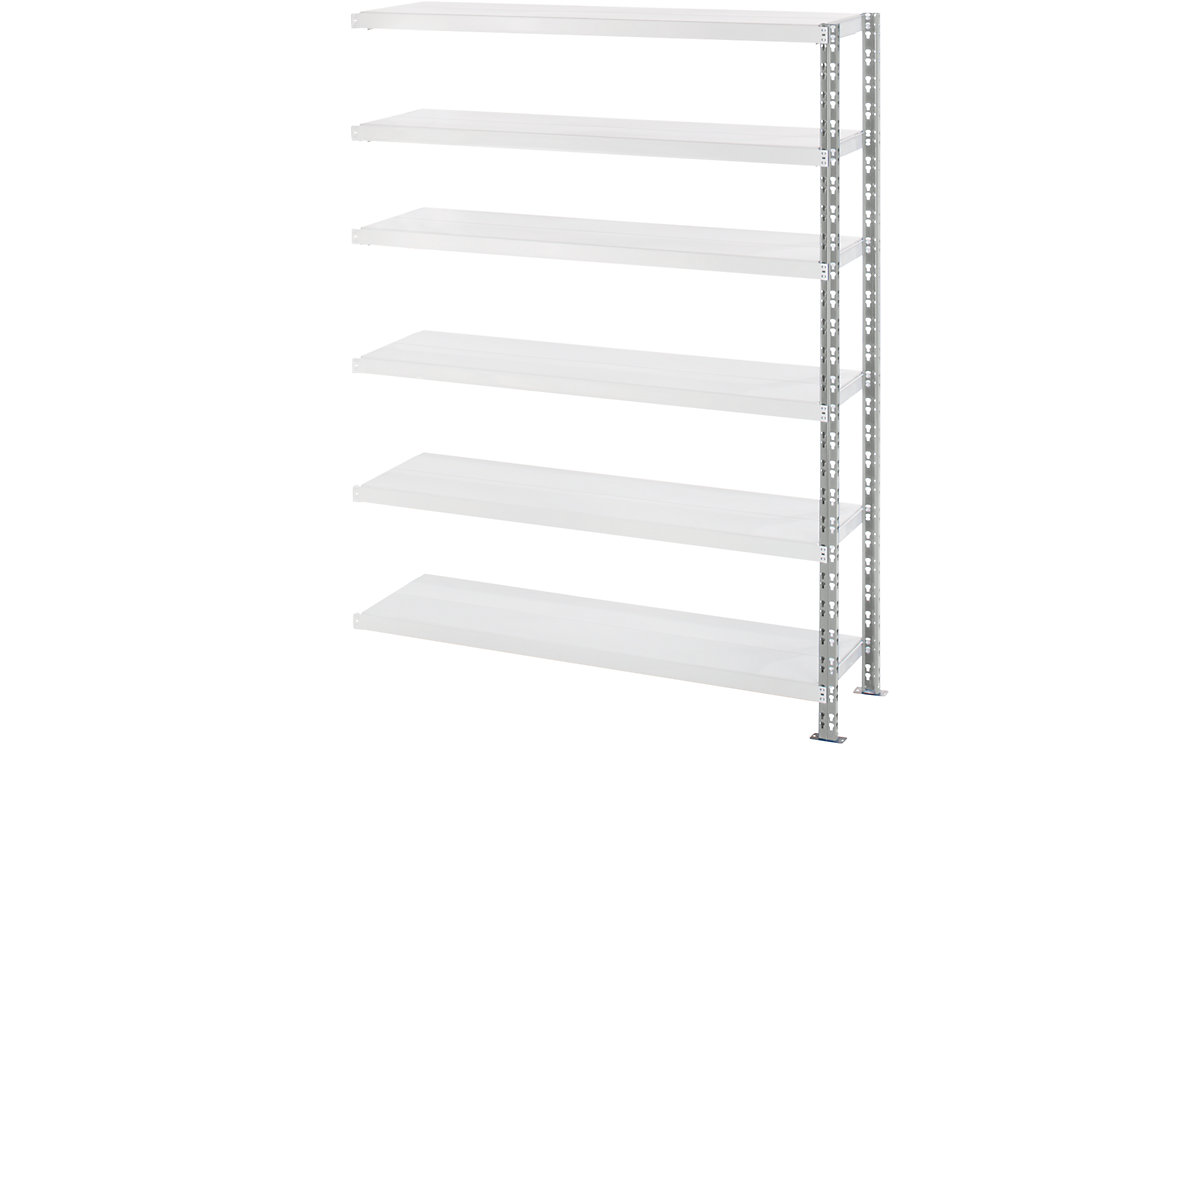 Wide span shelf unit with sheet steel shelves, depth 400 mm, extension shelf unit, HxW 1976 x 1525 mm